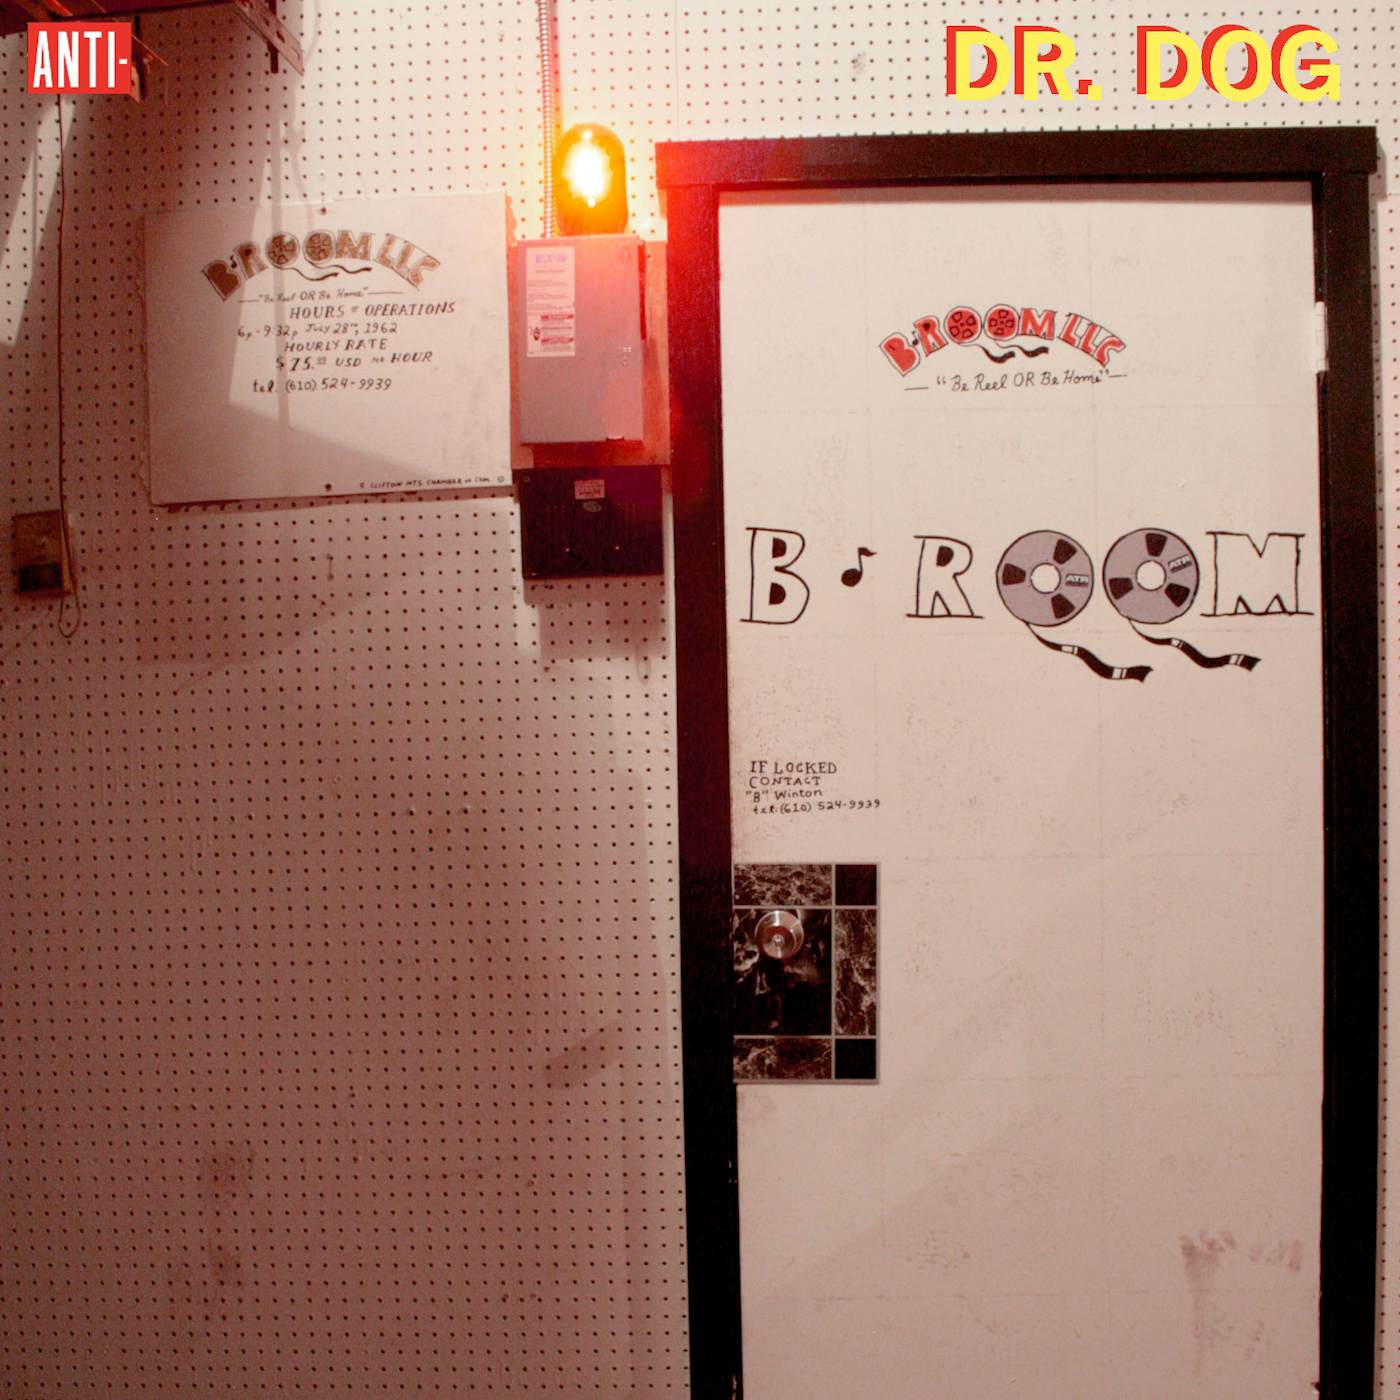 Dr. Dog B-ROOM CD